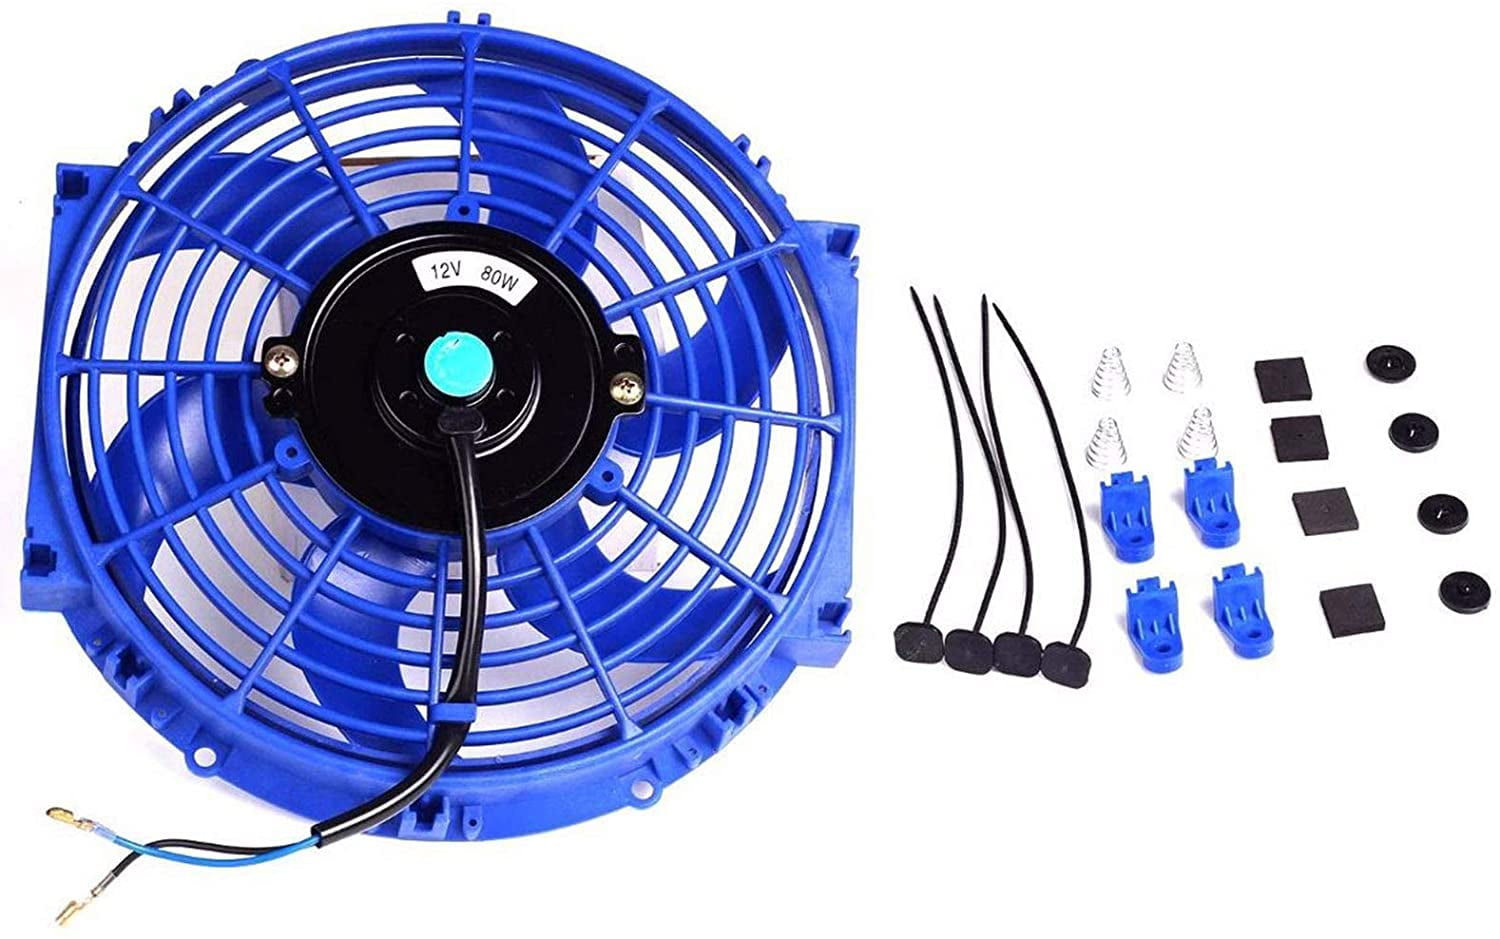 2x 7" inch Universal Electric Radiator OD Slim Fan Push/Pull 12V w/Mounting Kit 